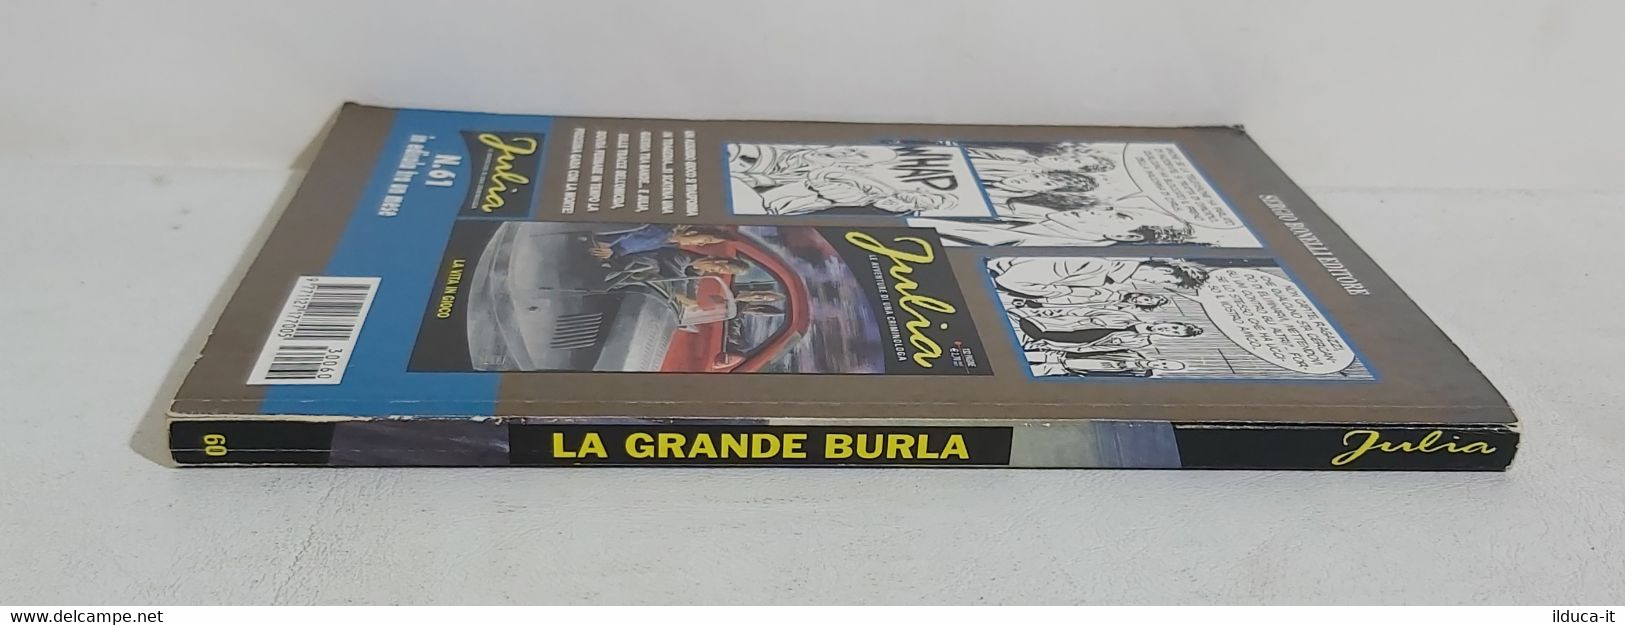 I104881 JULIA N. 60 - La Grande Burla - Bonelli 2003 - Bonelli